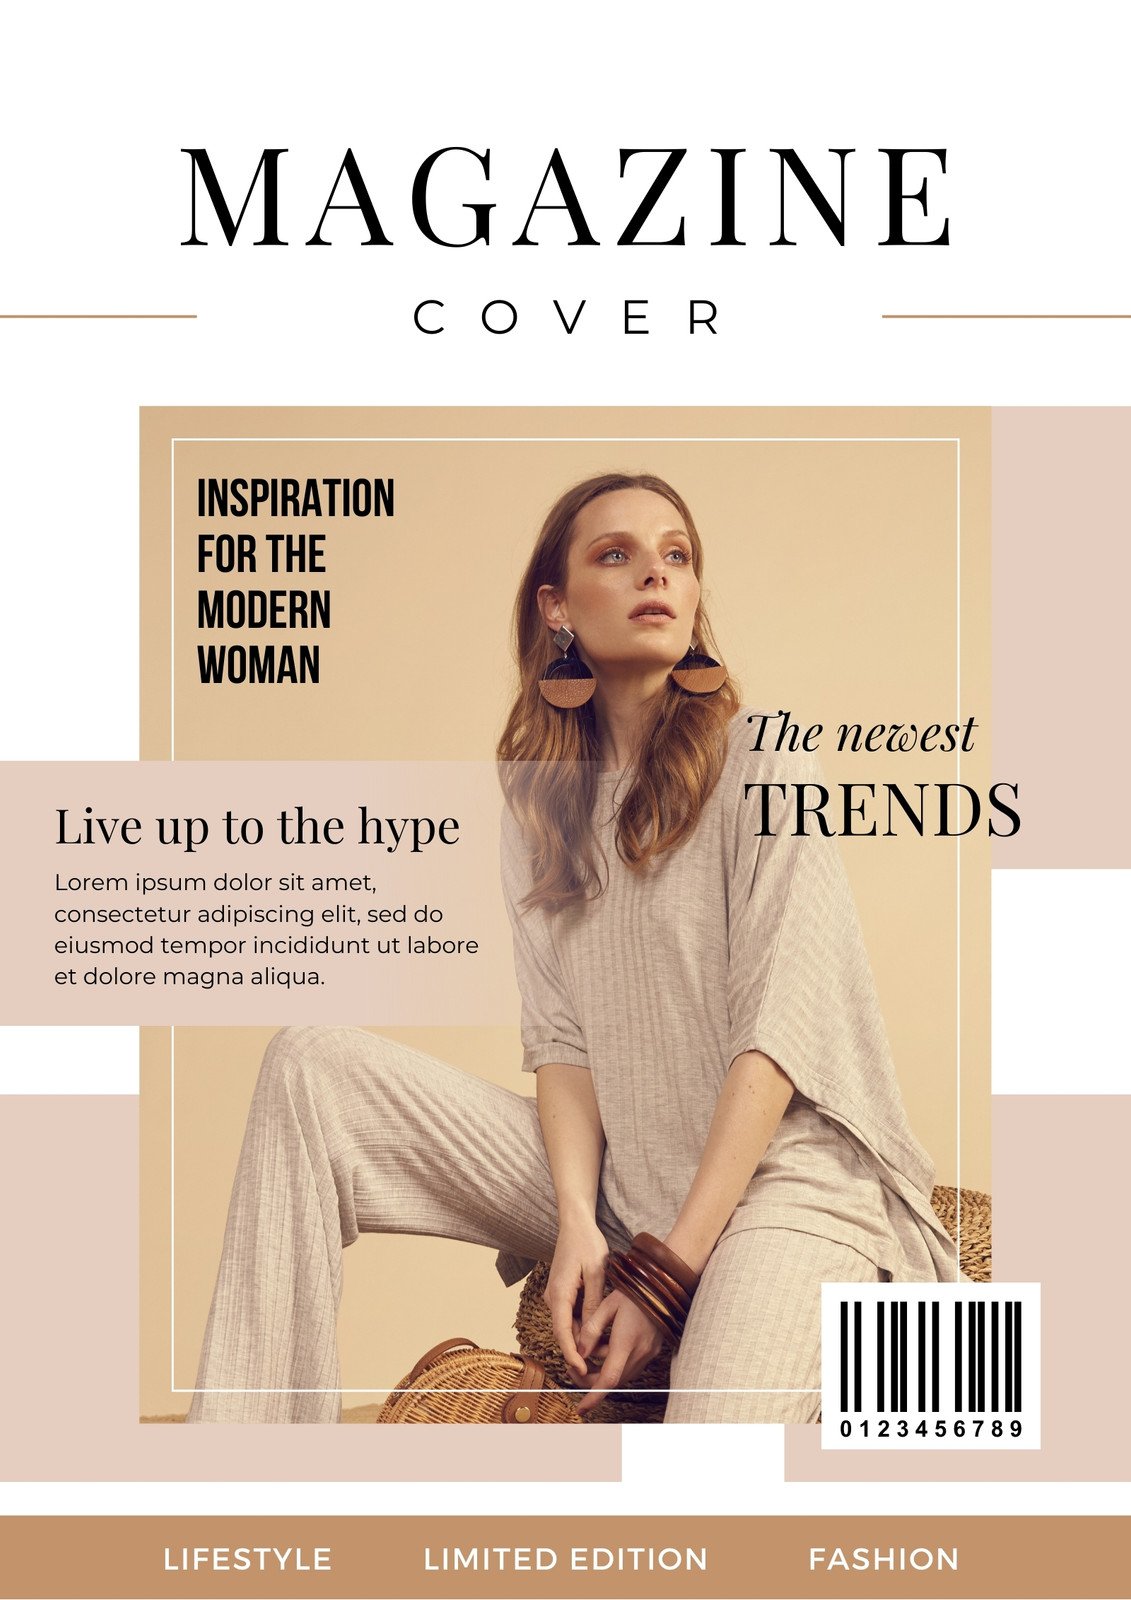 Fashion Magazine Cover Design Inspiration